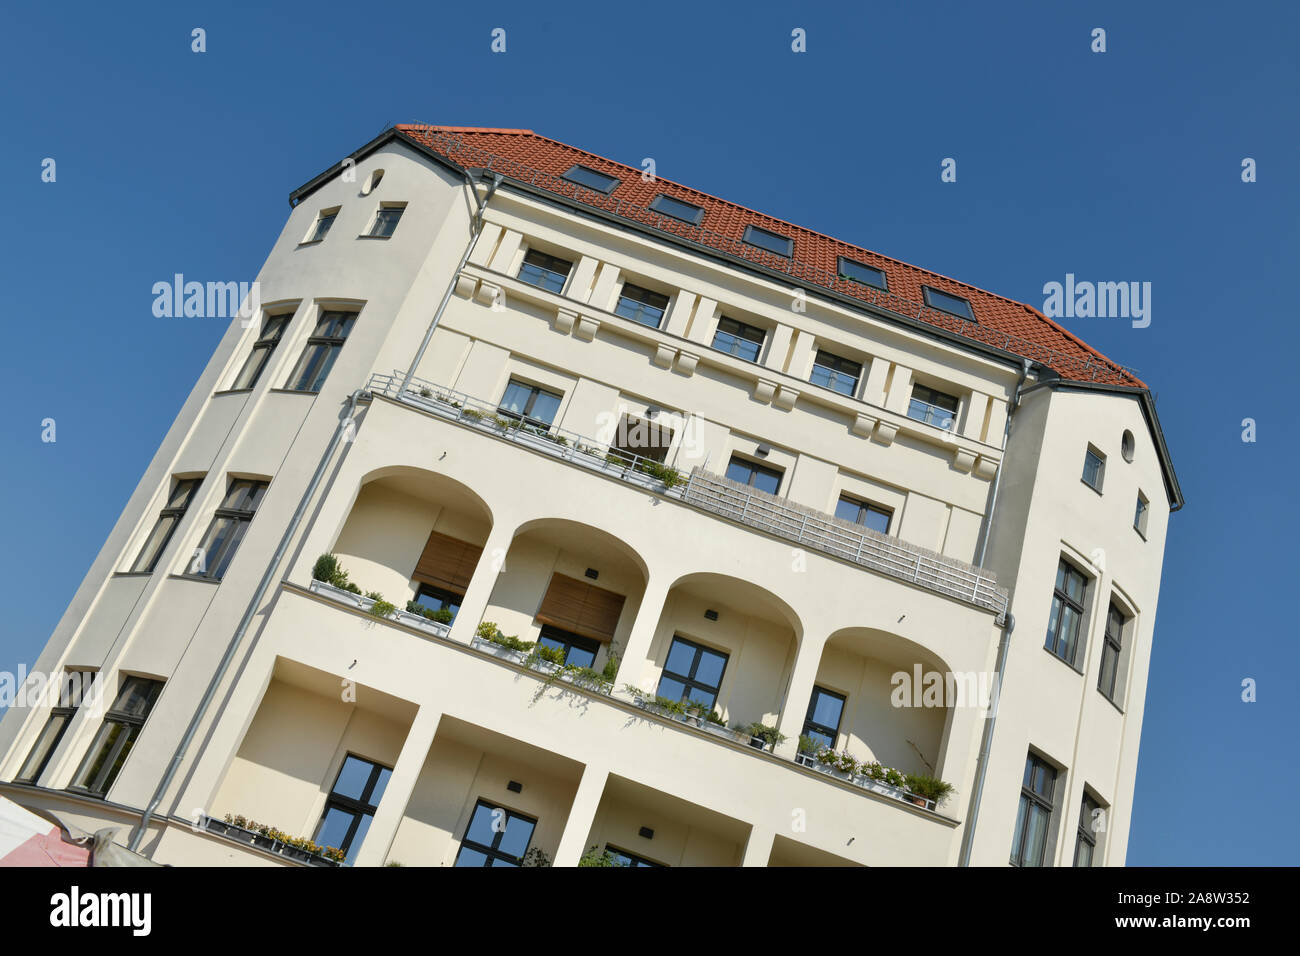 Wohnhaus, Caligariplatz, Weißensee, Pankow, Berlin, Deutschland Stock Photo